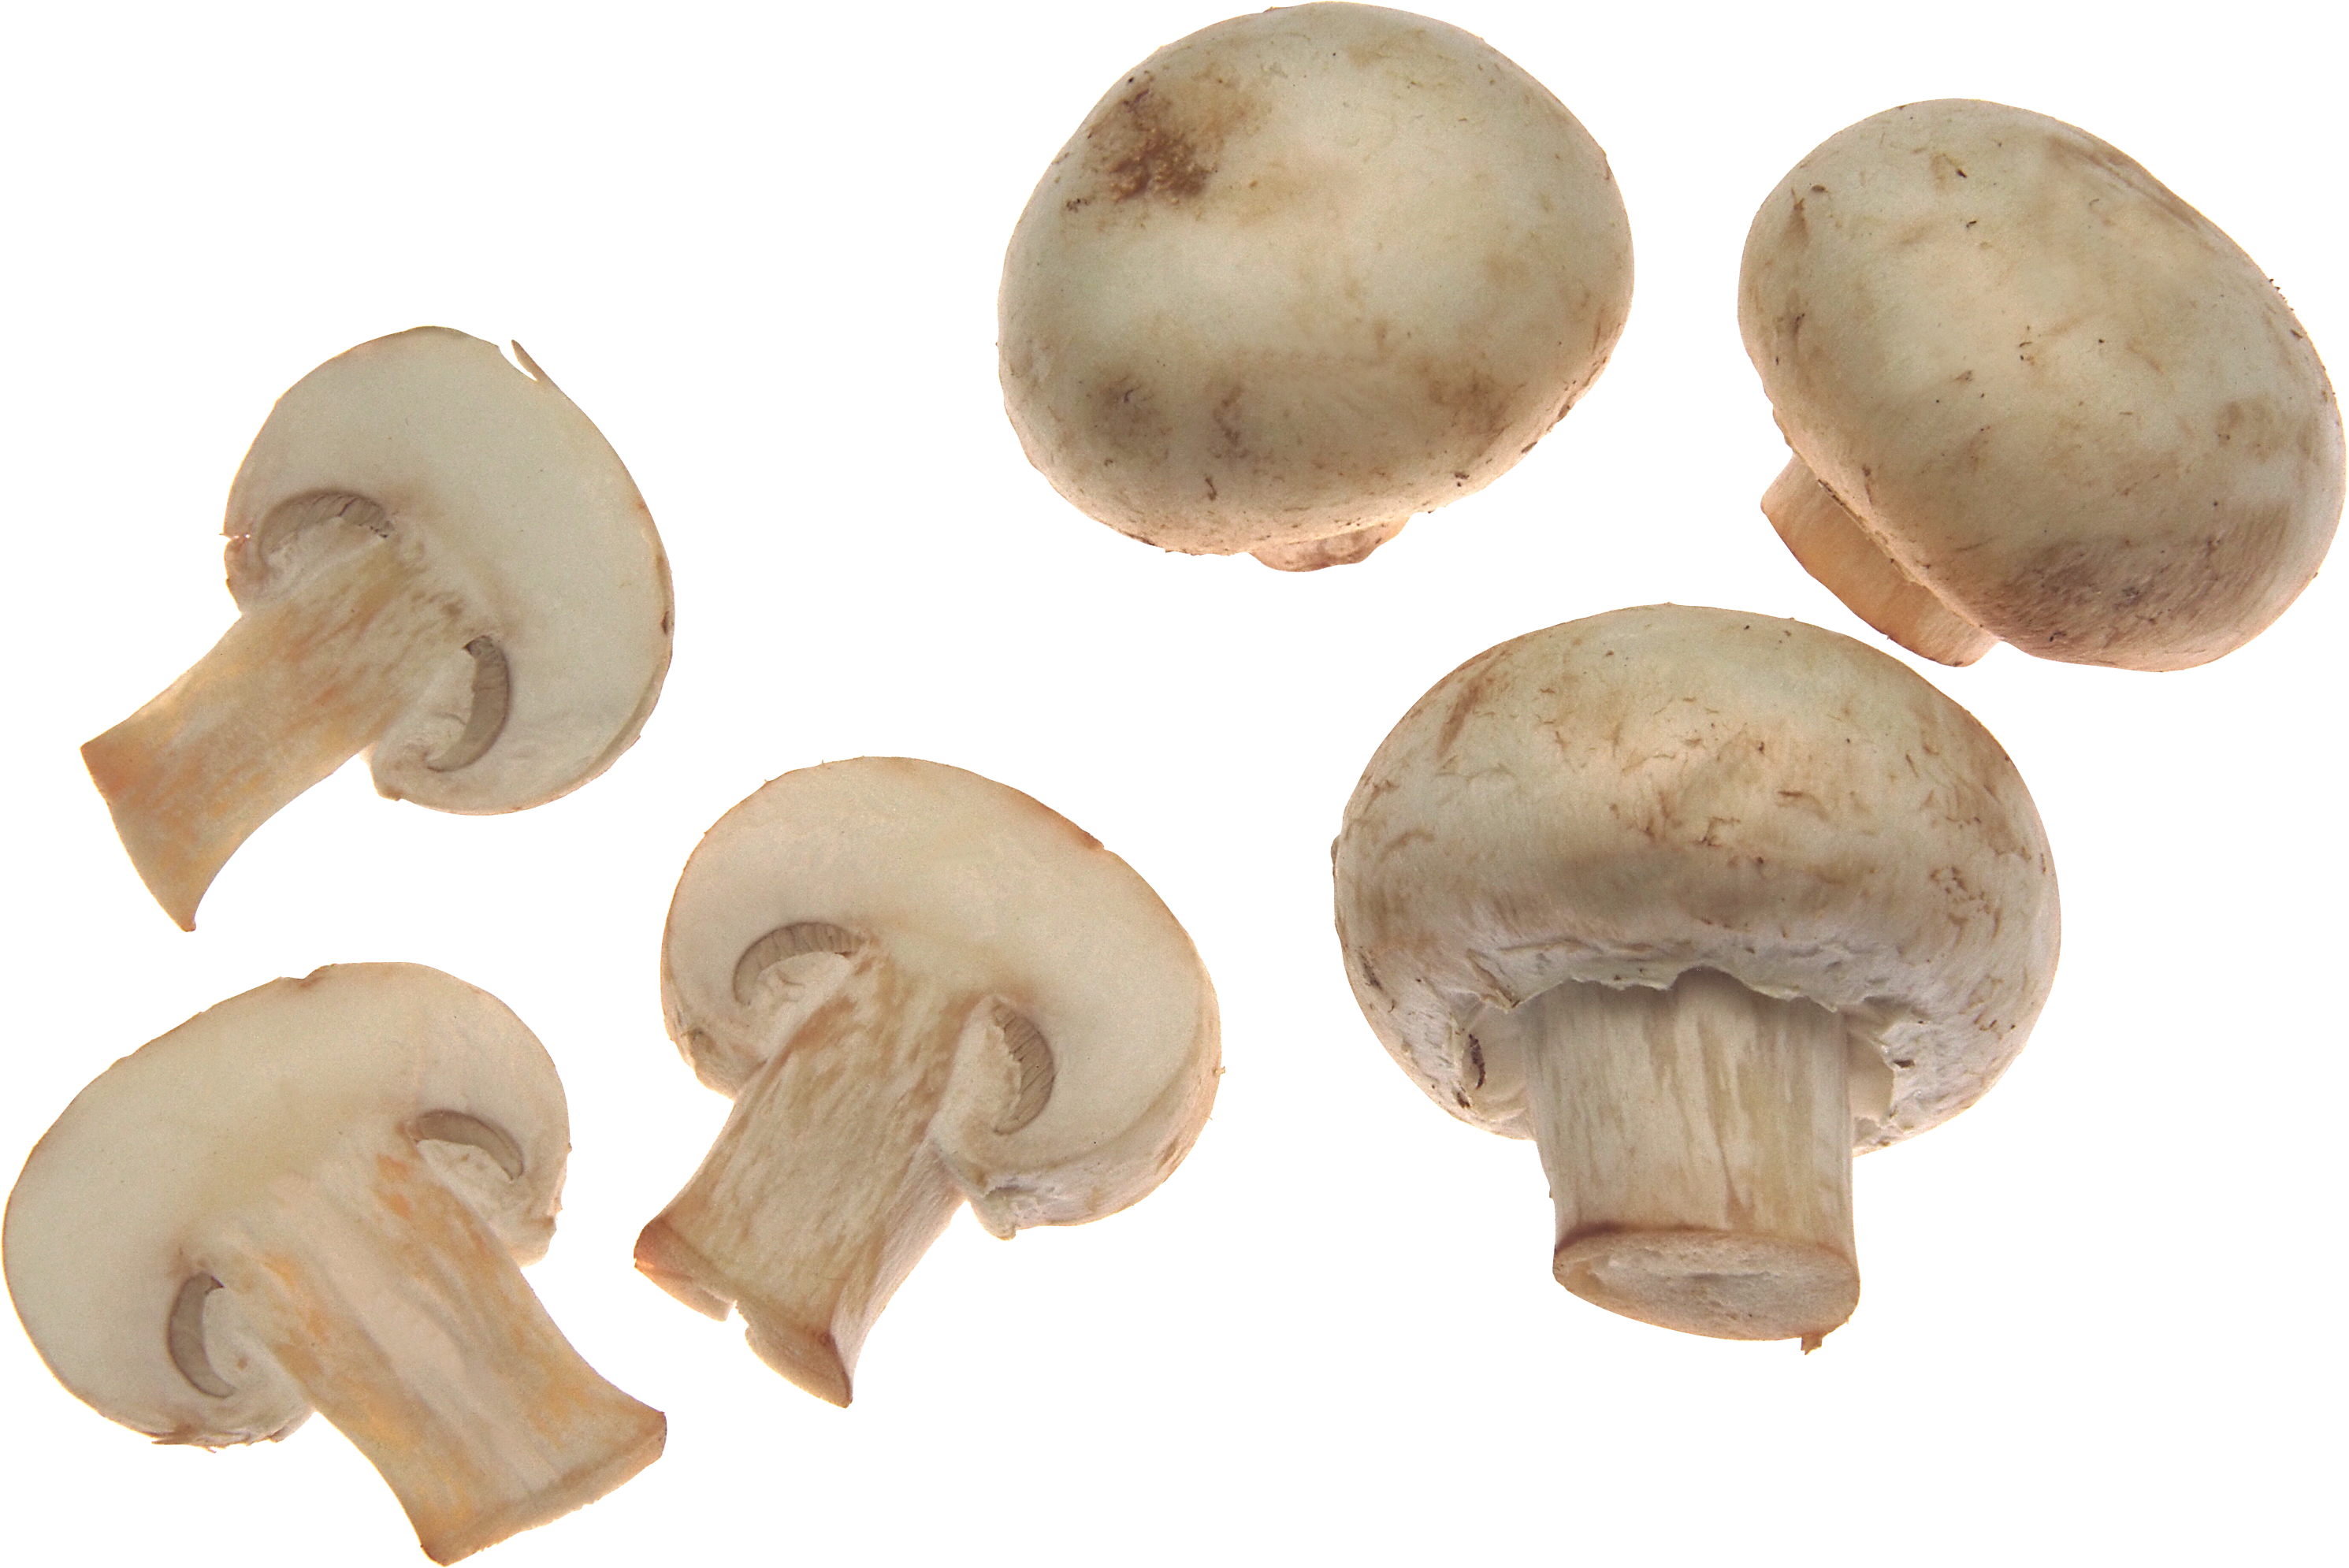 Mushroom clipart transparent